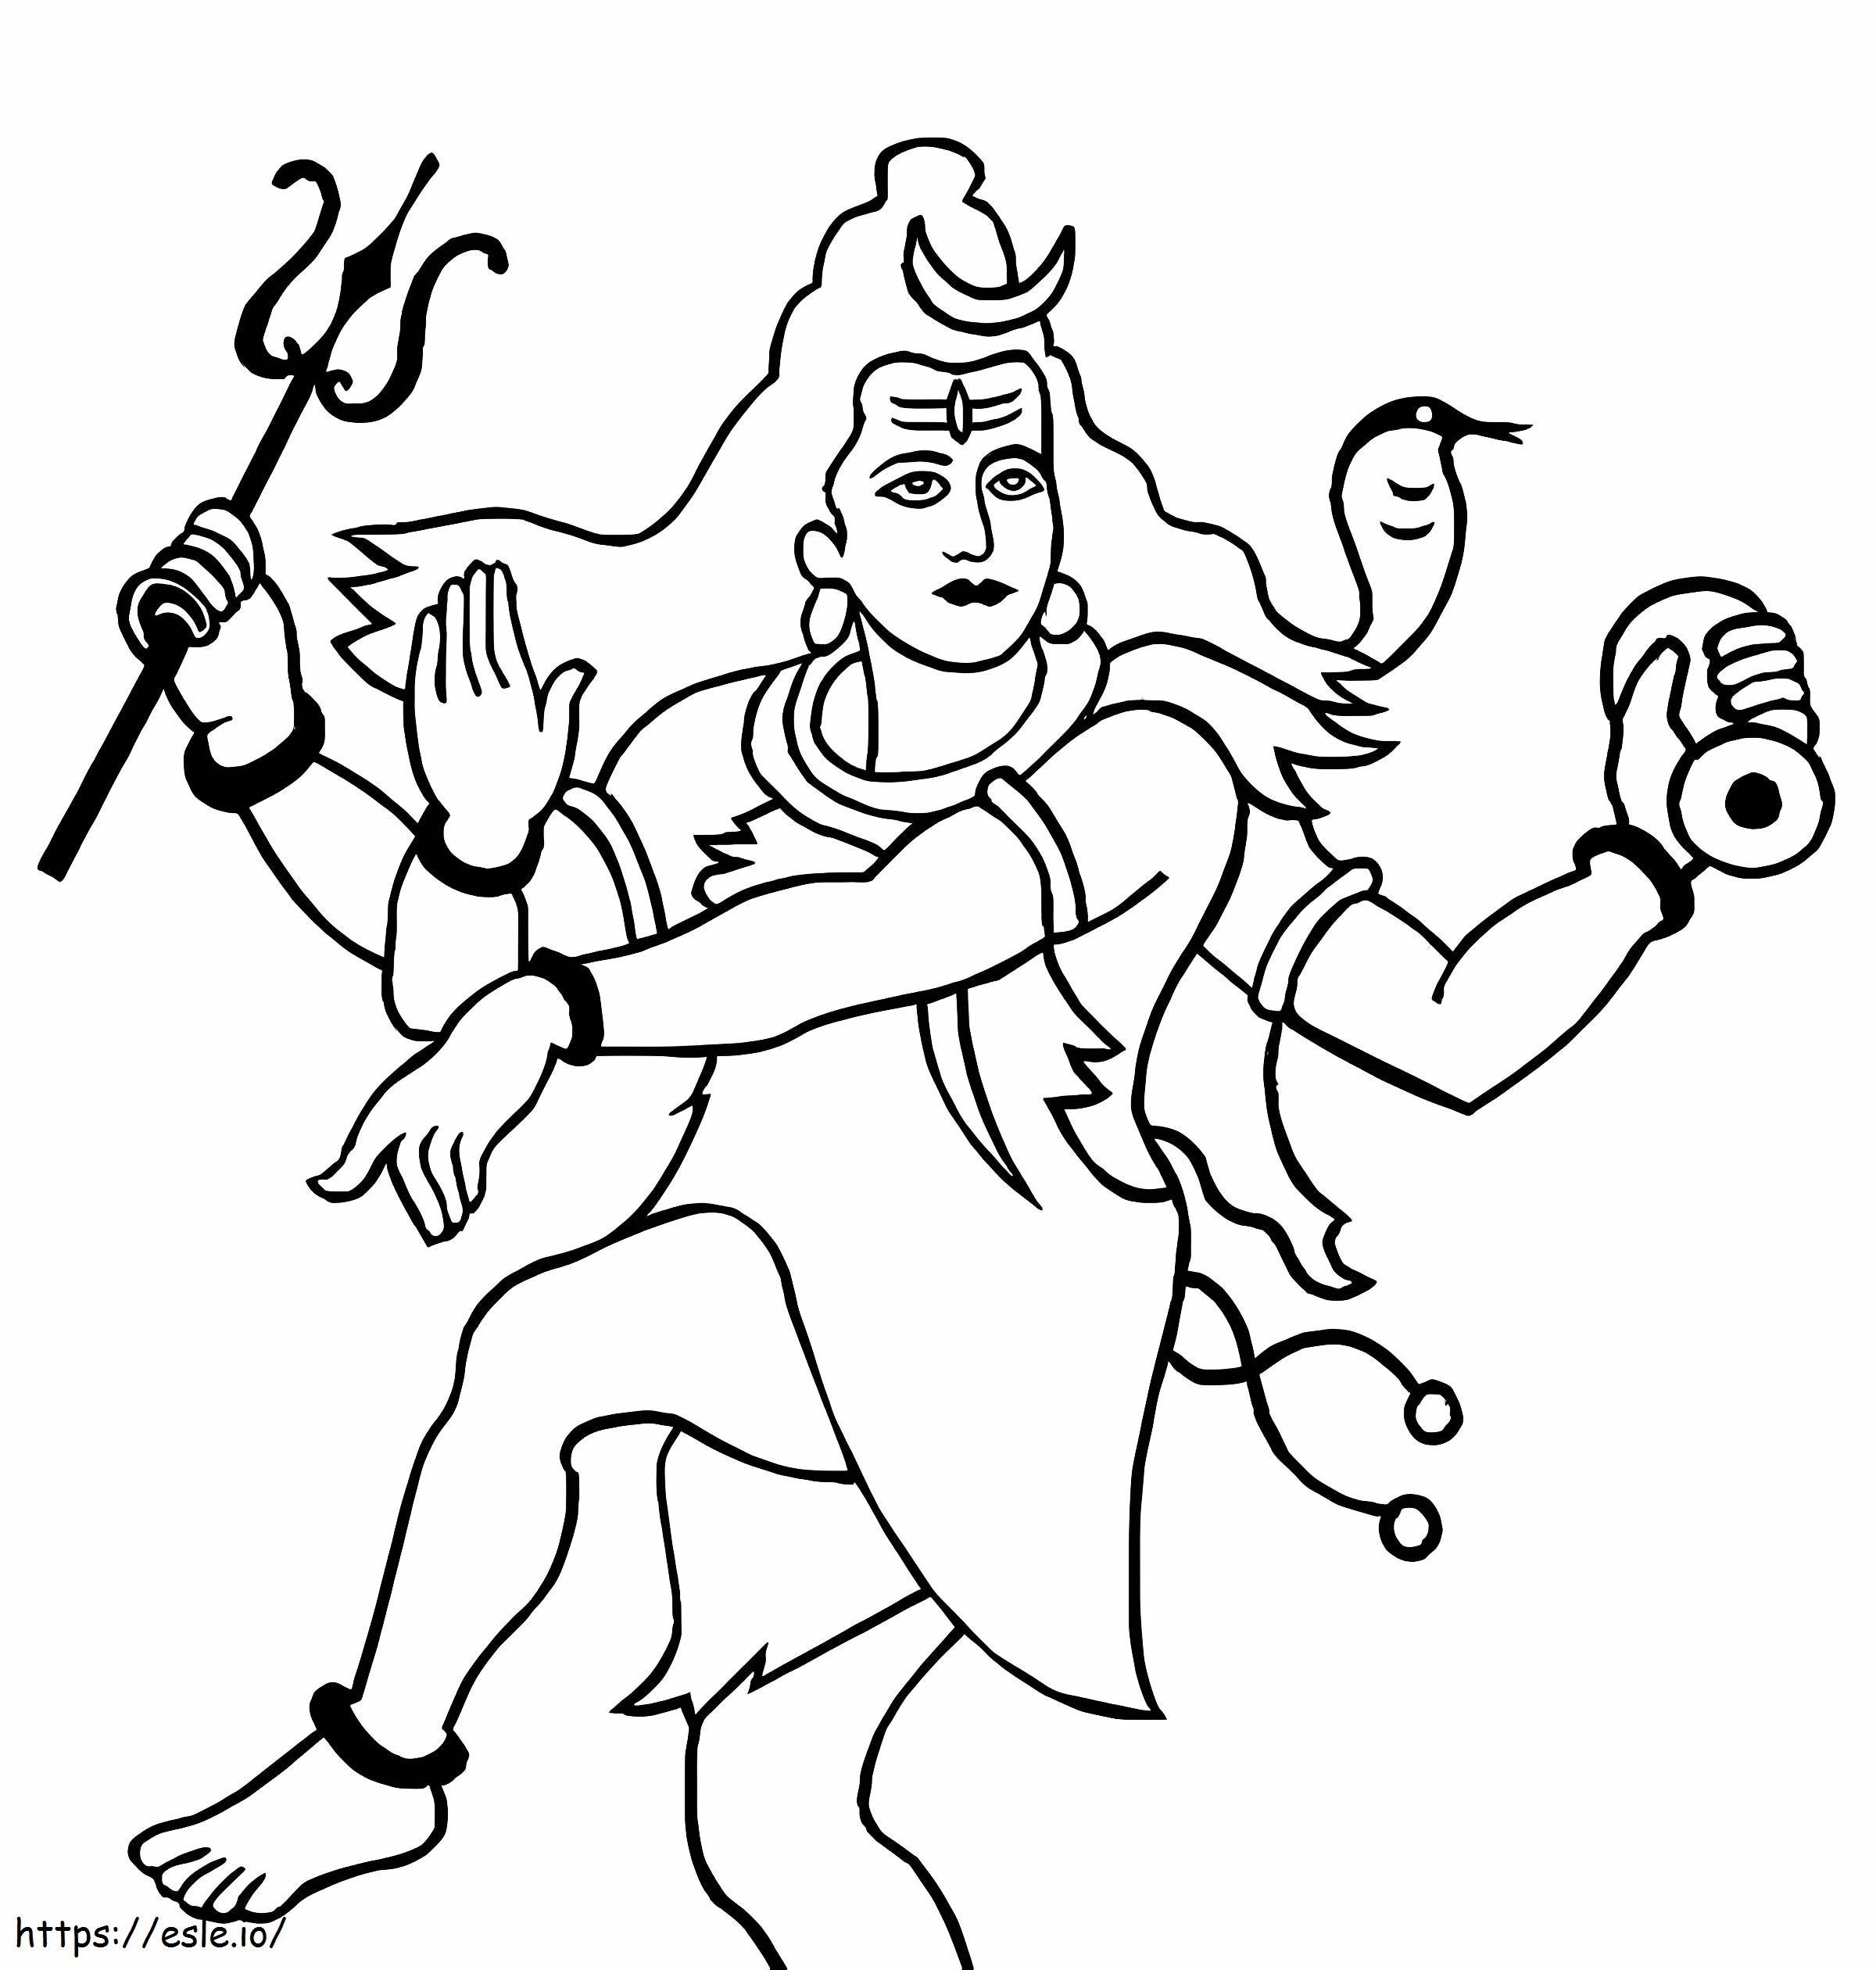 Lord Shiva 4 ausmalbilder